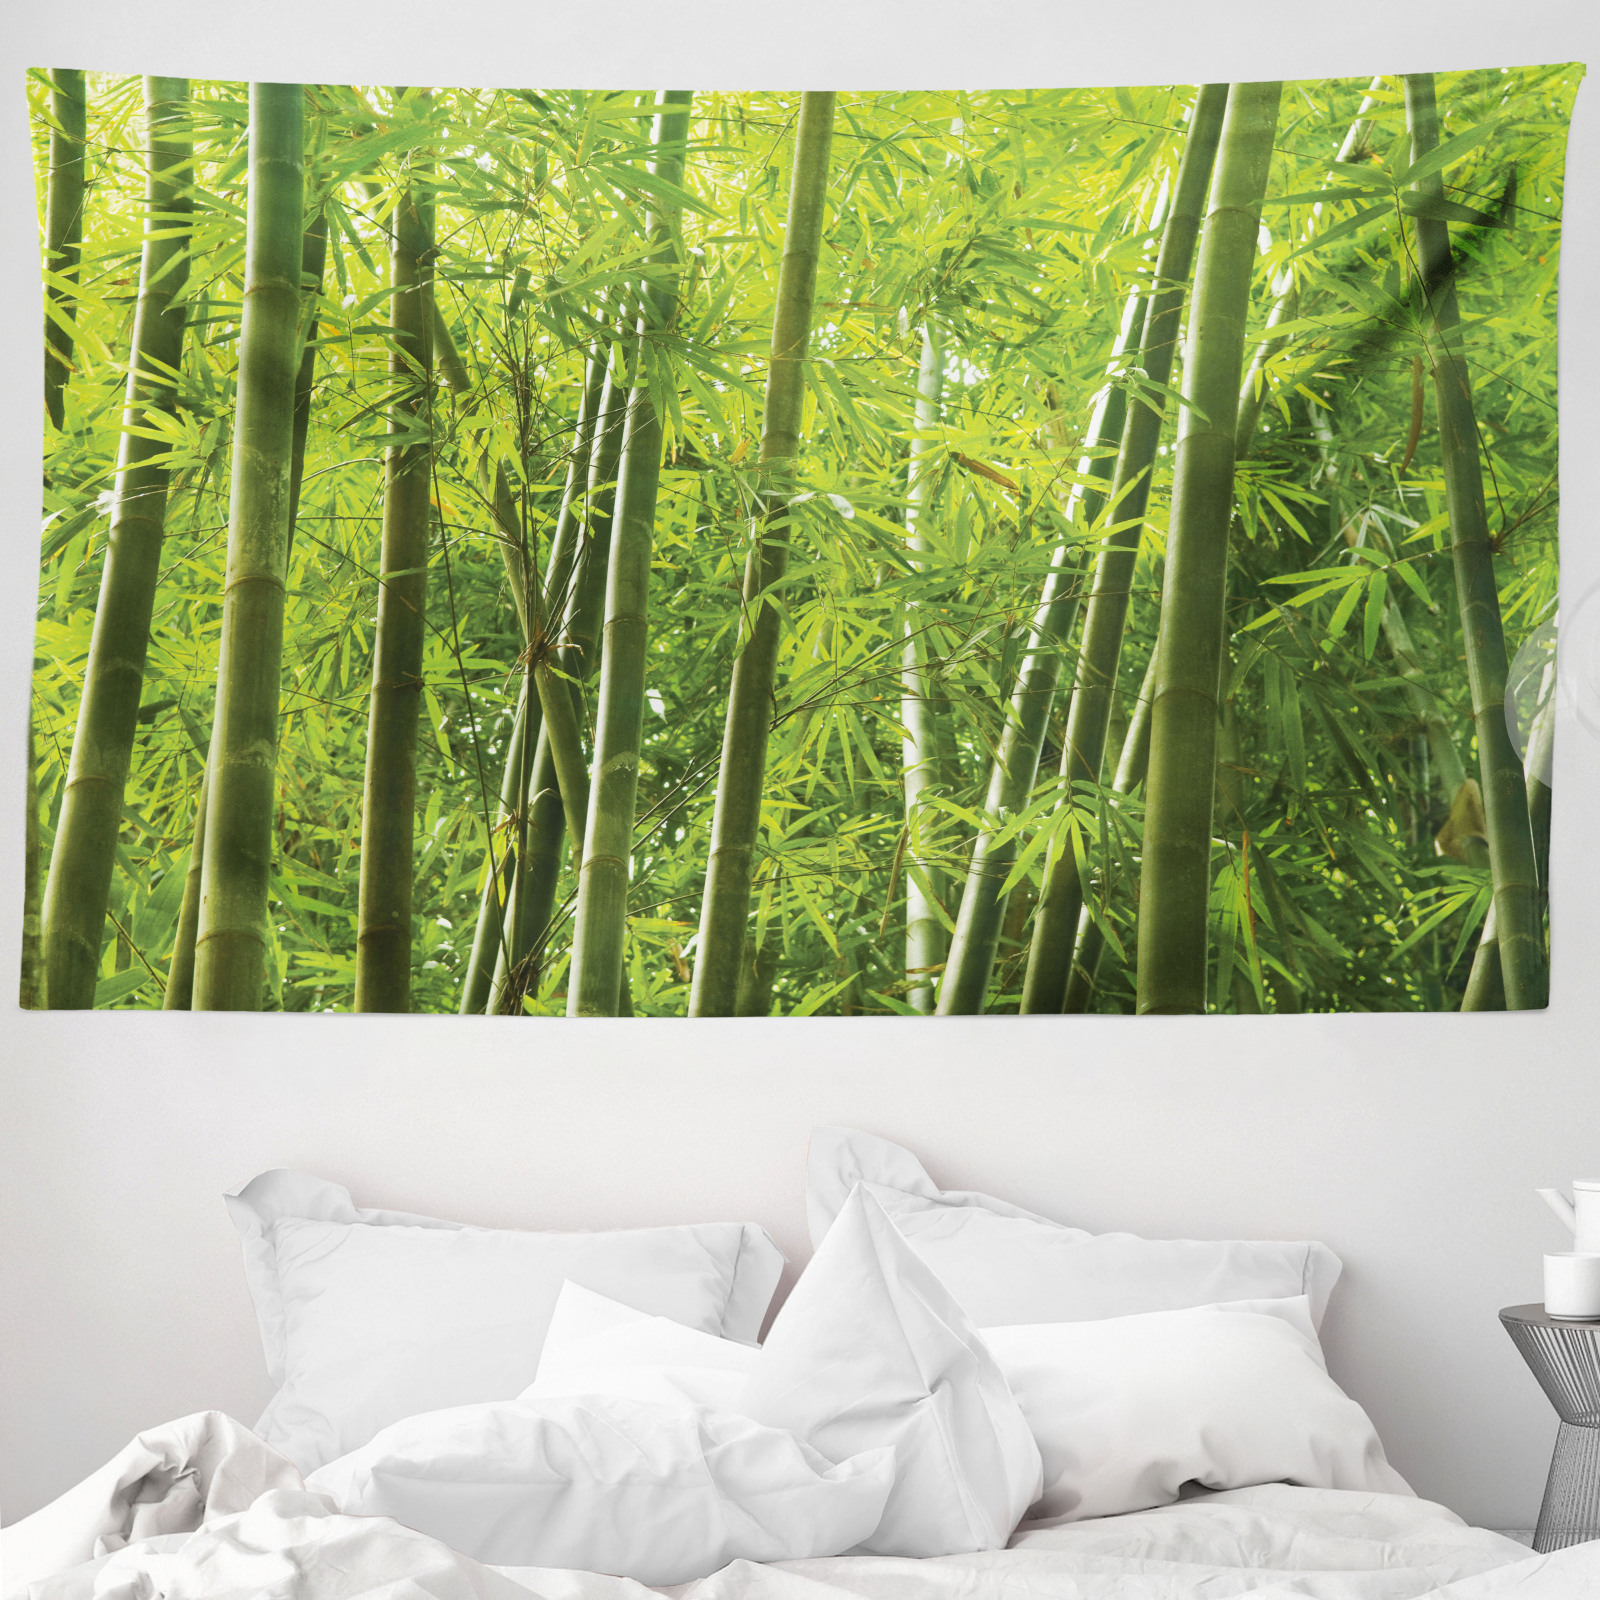  Bambou  Tapisserie  Exotique Bambou  Tropical eBay